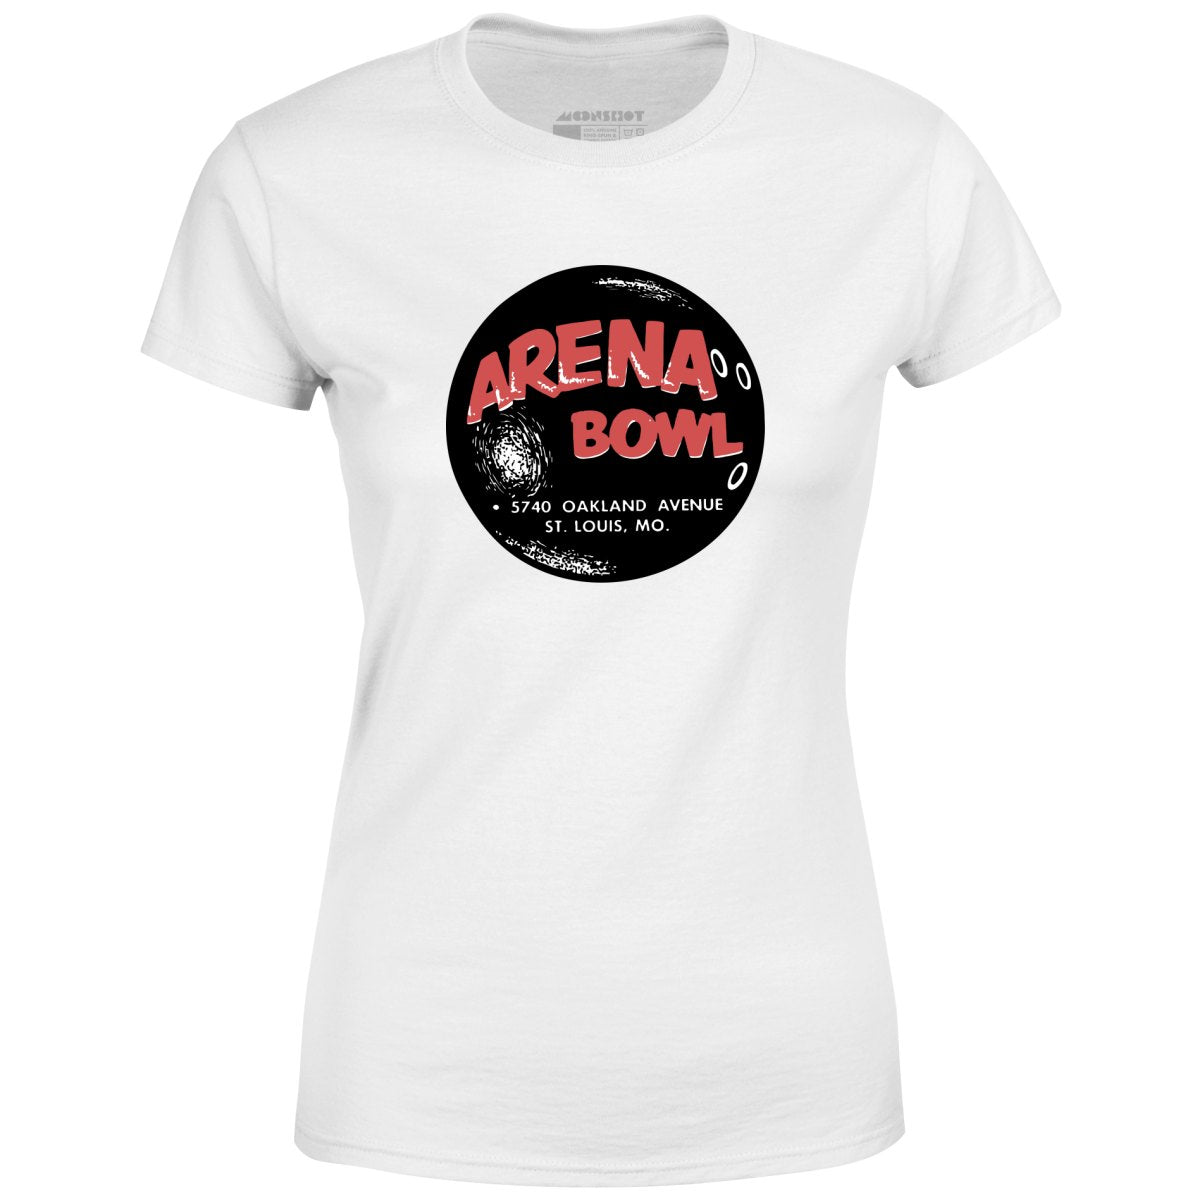 Arena Bowl - St. Louis, MO - Vintage Bowling Alley - Women's T-Shirt